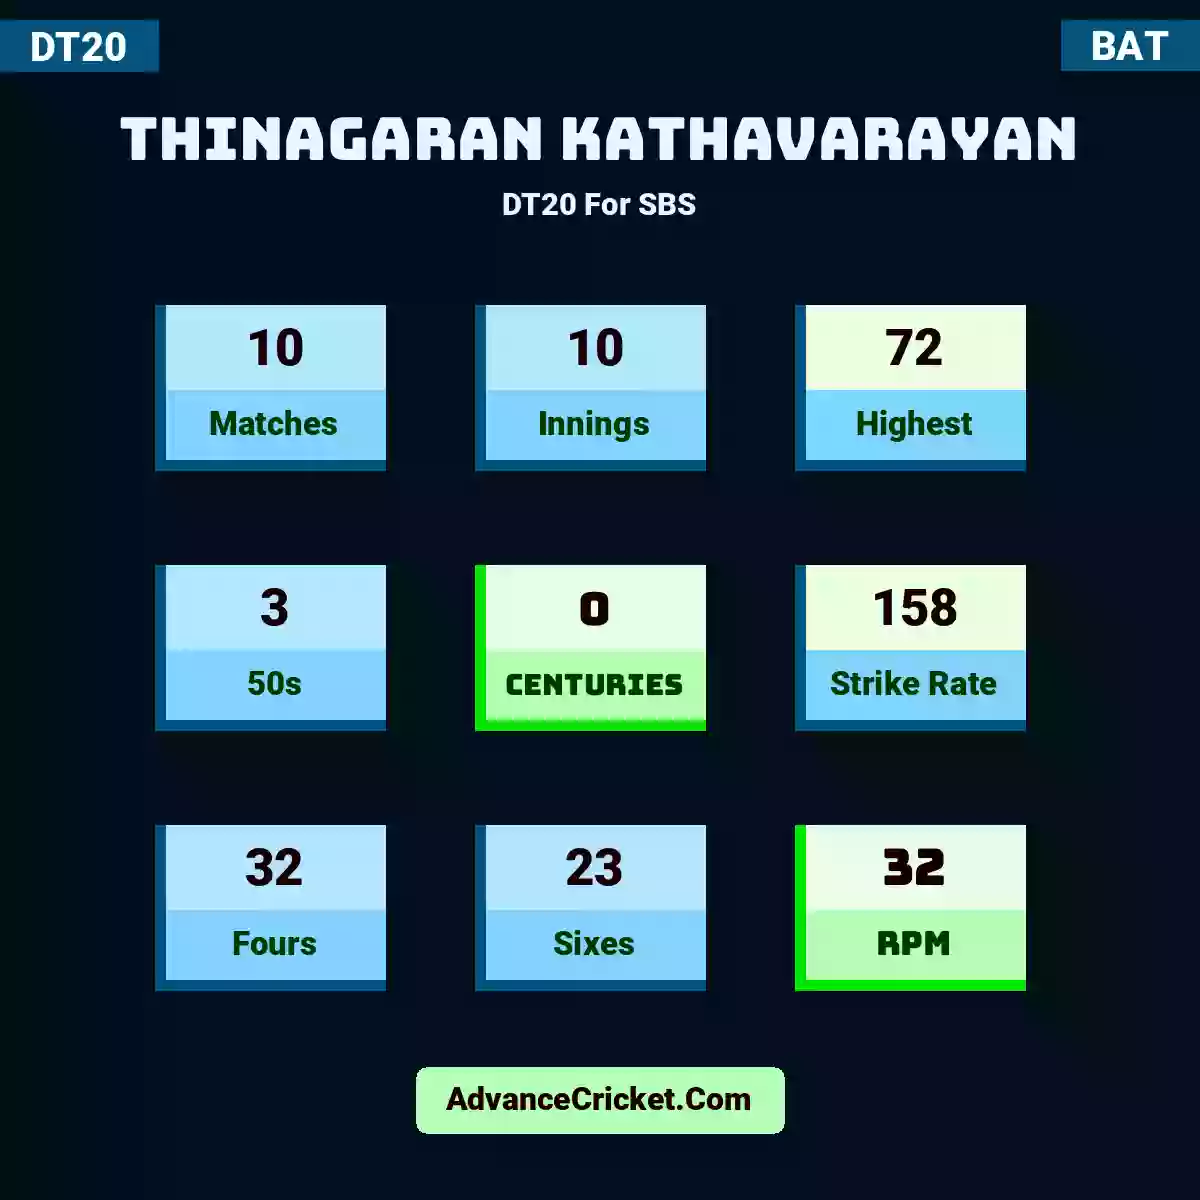 Thinagaran Kathavarayan DT20  For SBS, Thinagaran Kathavarayan played 10 matches, scored 72 runs as highest, 3 half-centuries, and 0 centuries, with a strike rate of 158. T.Kathavarayan hit 32 fours and 23 sixes, with an RPM of 32.